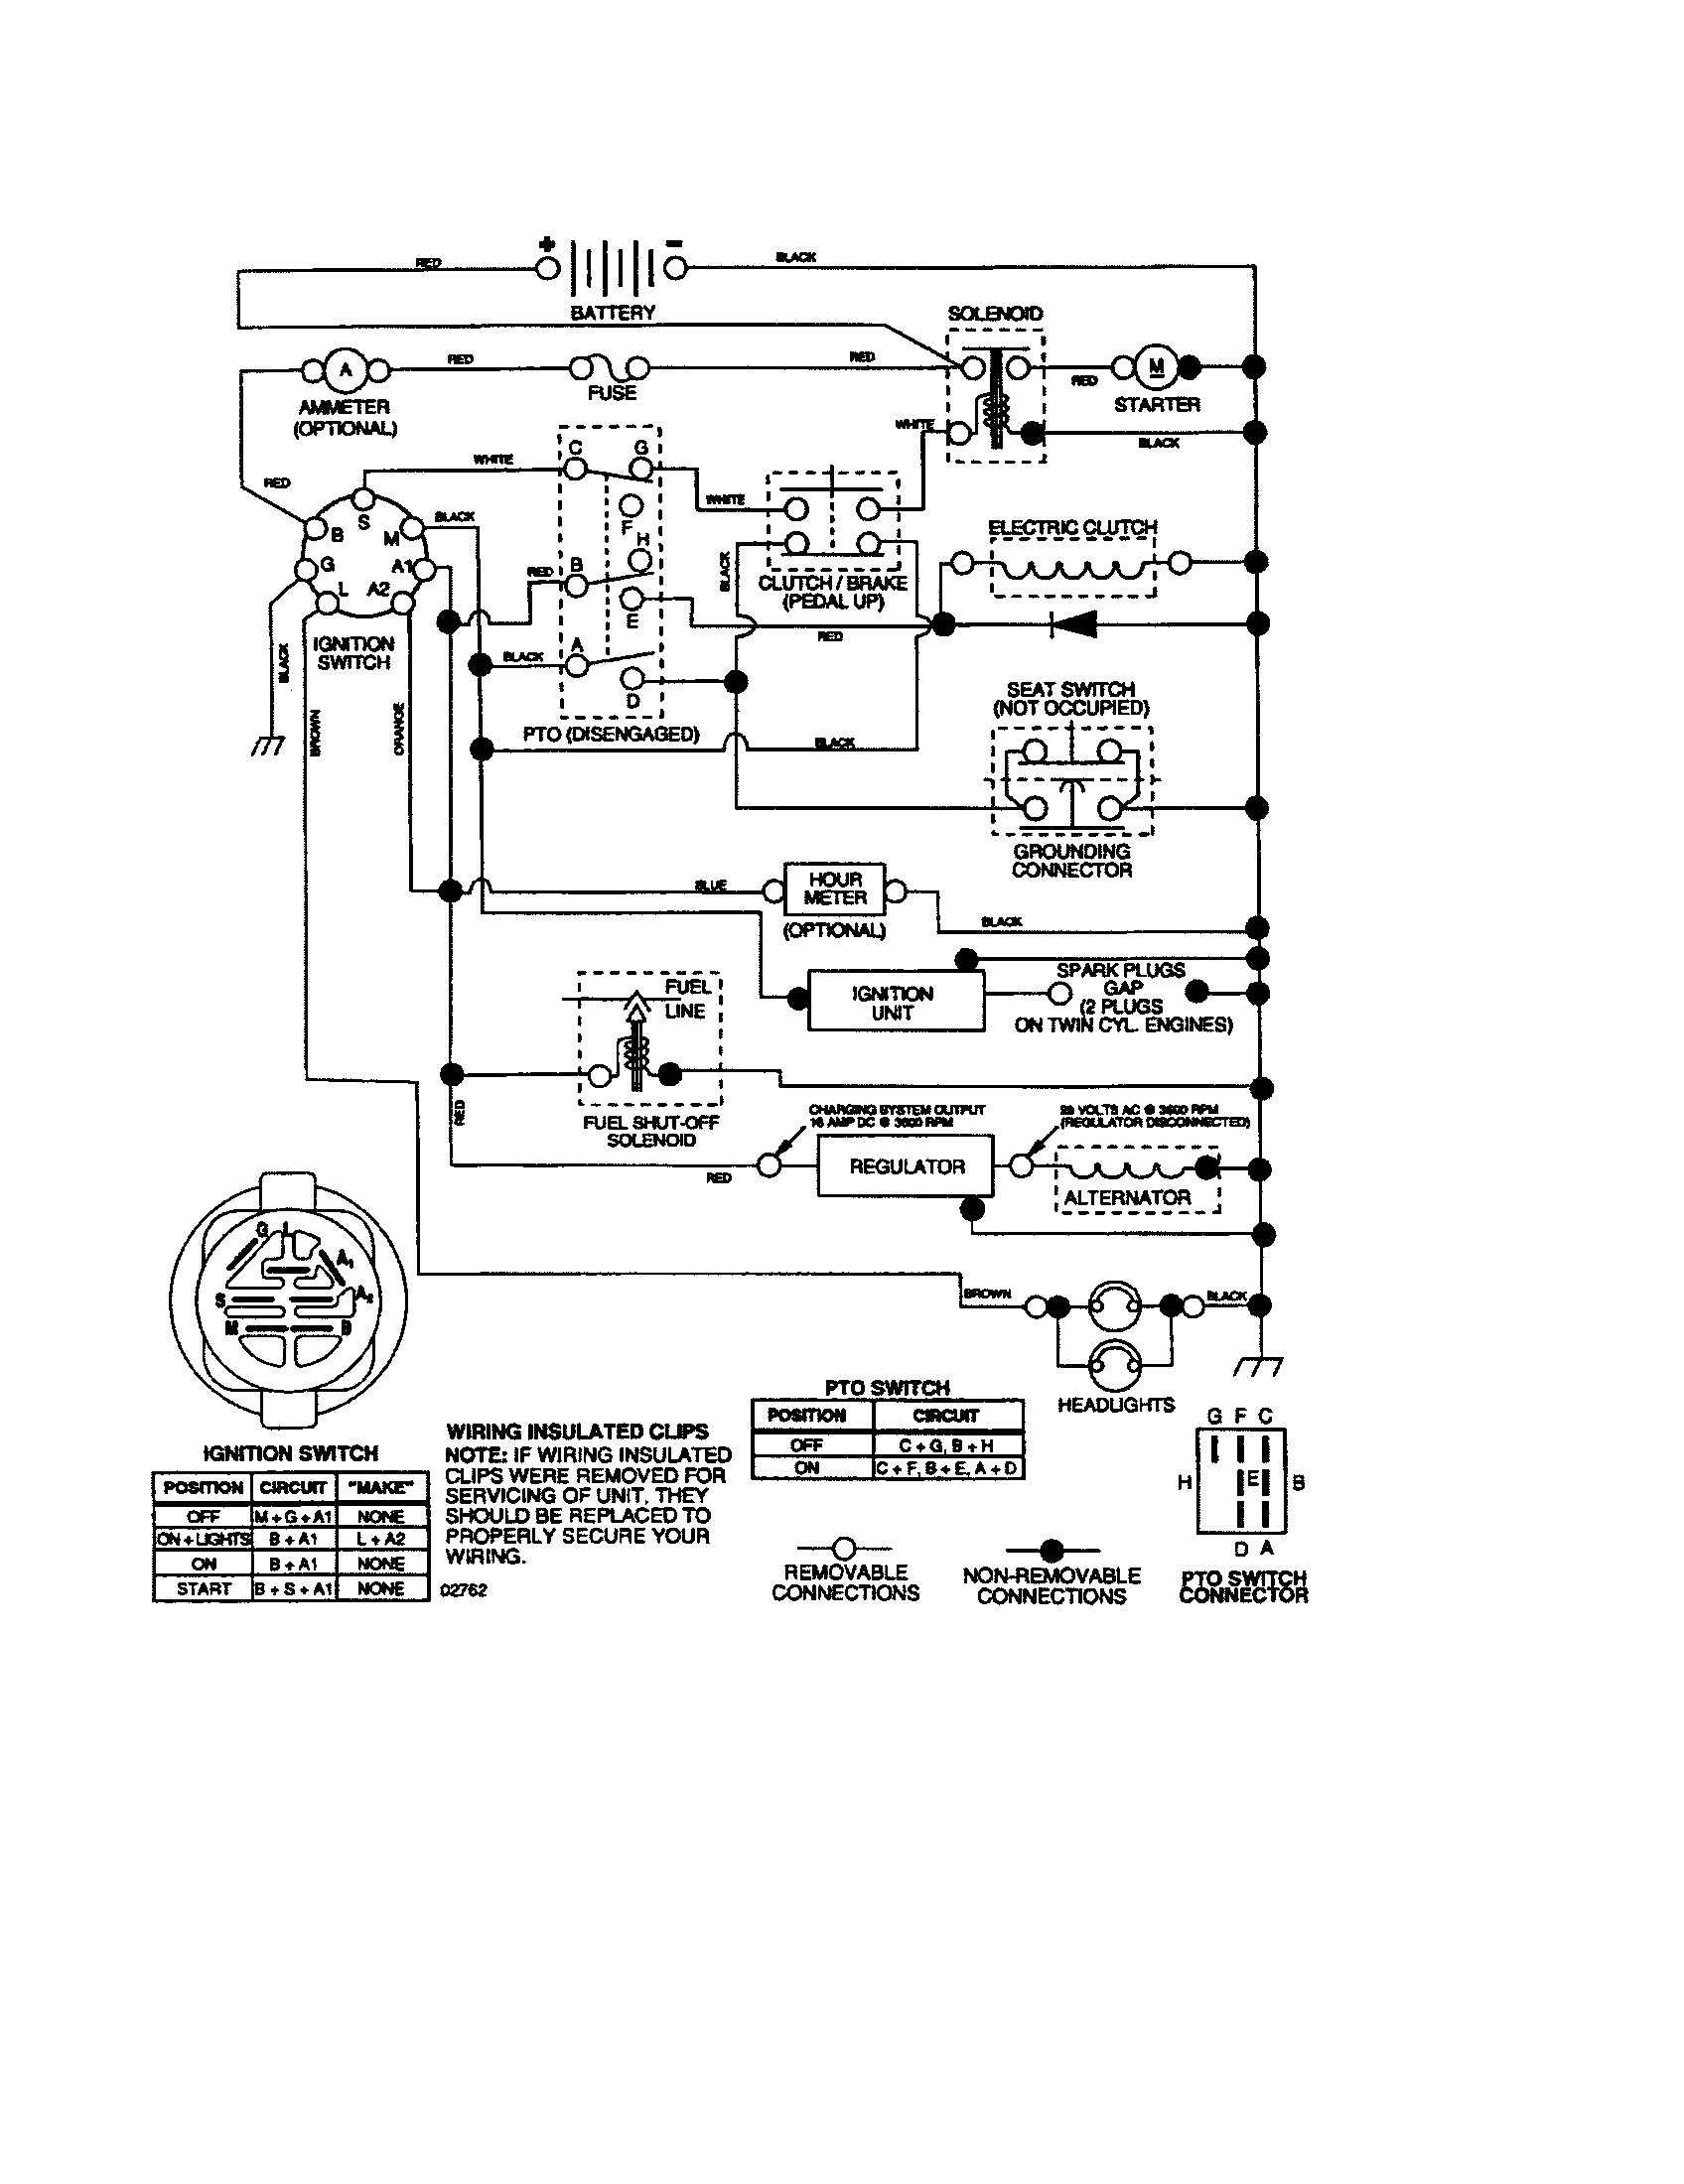 Wiring Diagram For A Craftsman Riding Mower Valid Craftsman Lt2000 Toro Magneto Diagram Craftsman Lawn Mower Wiring Diagram